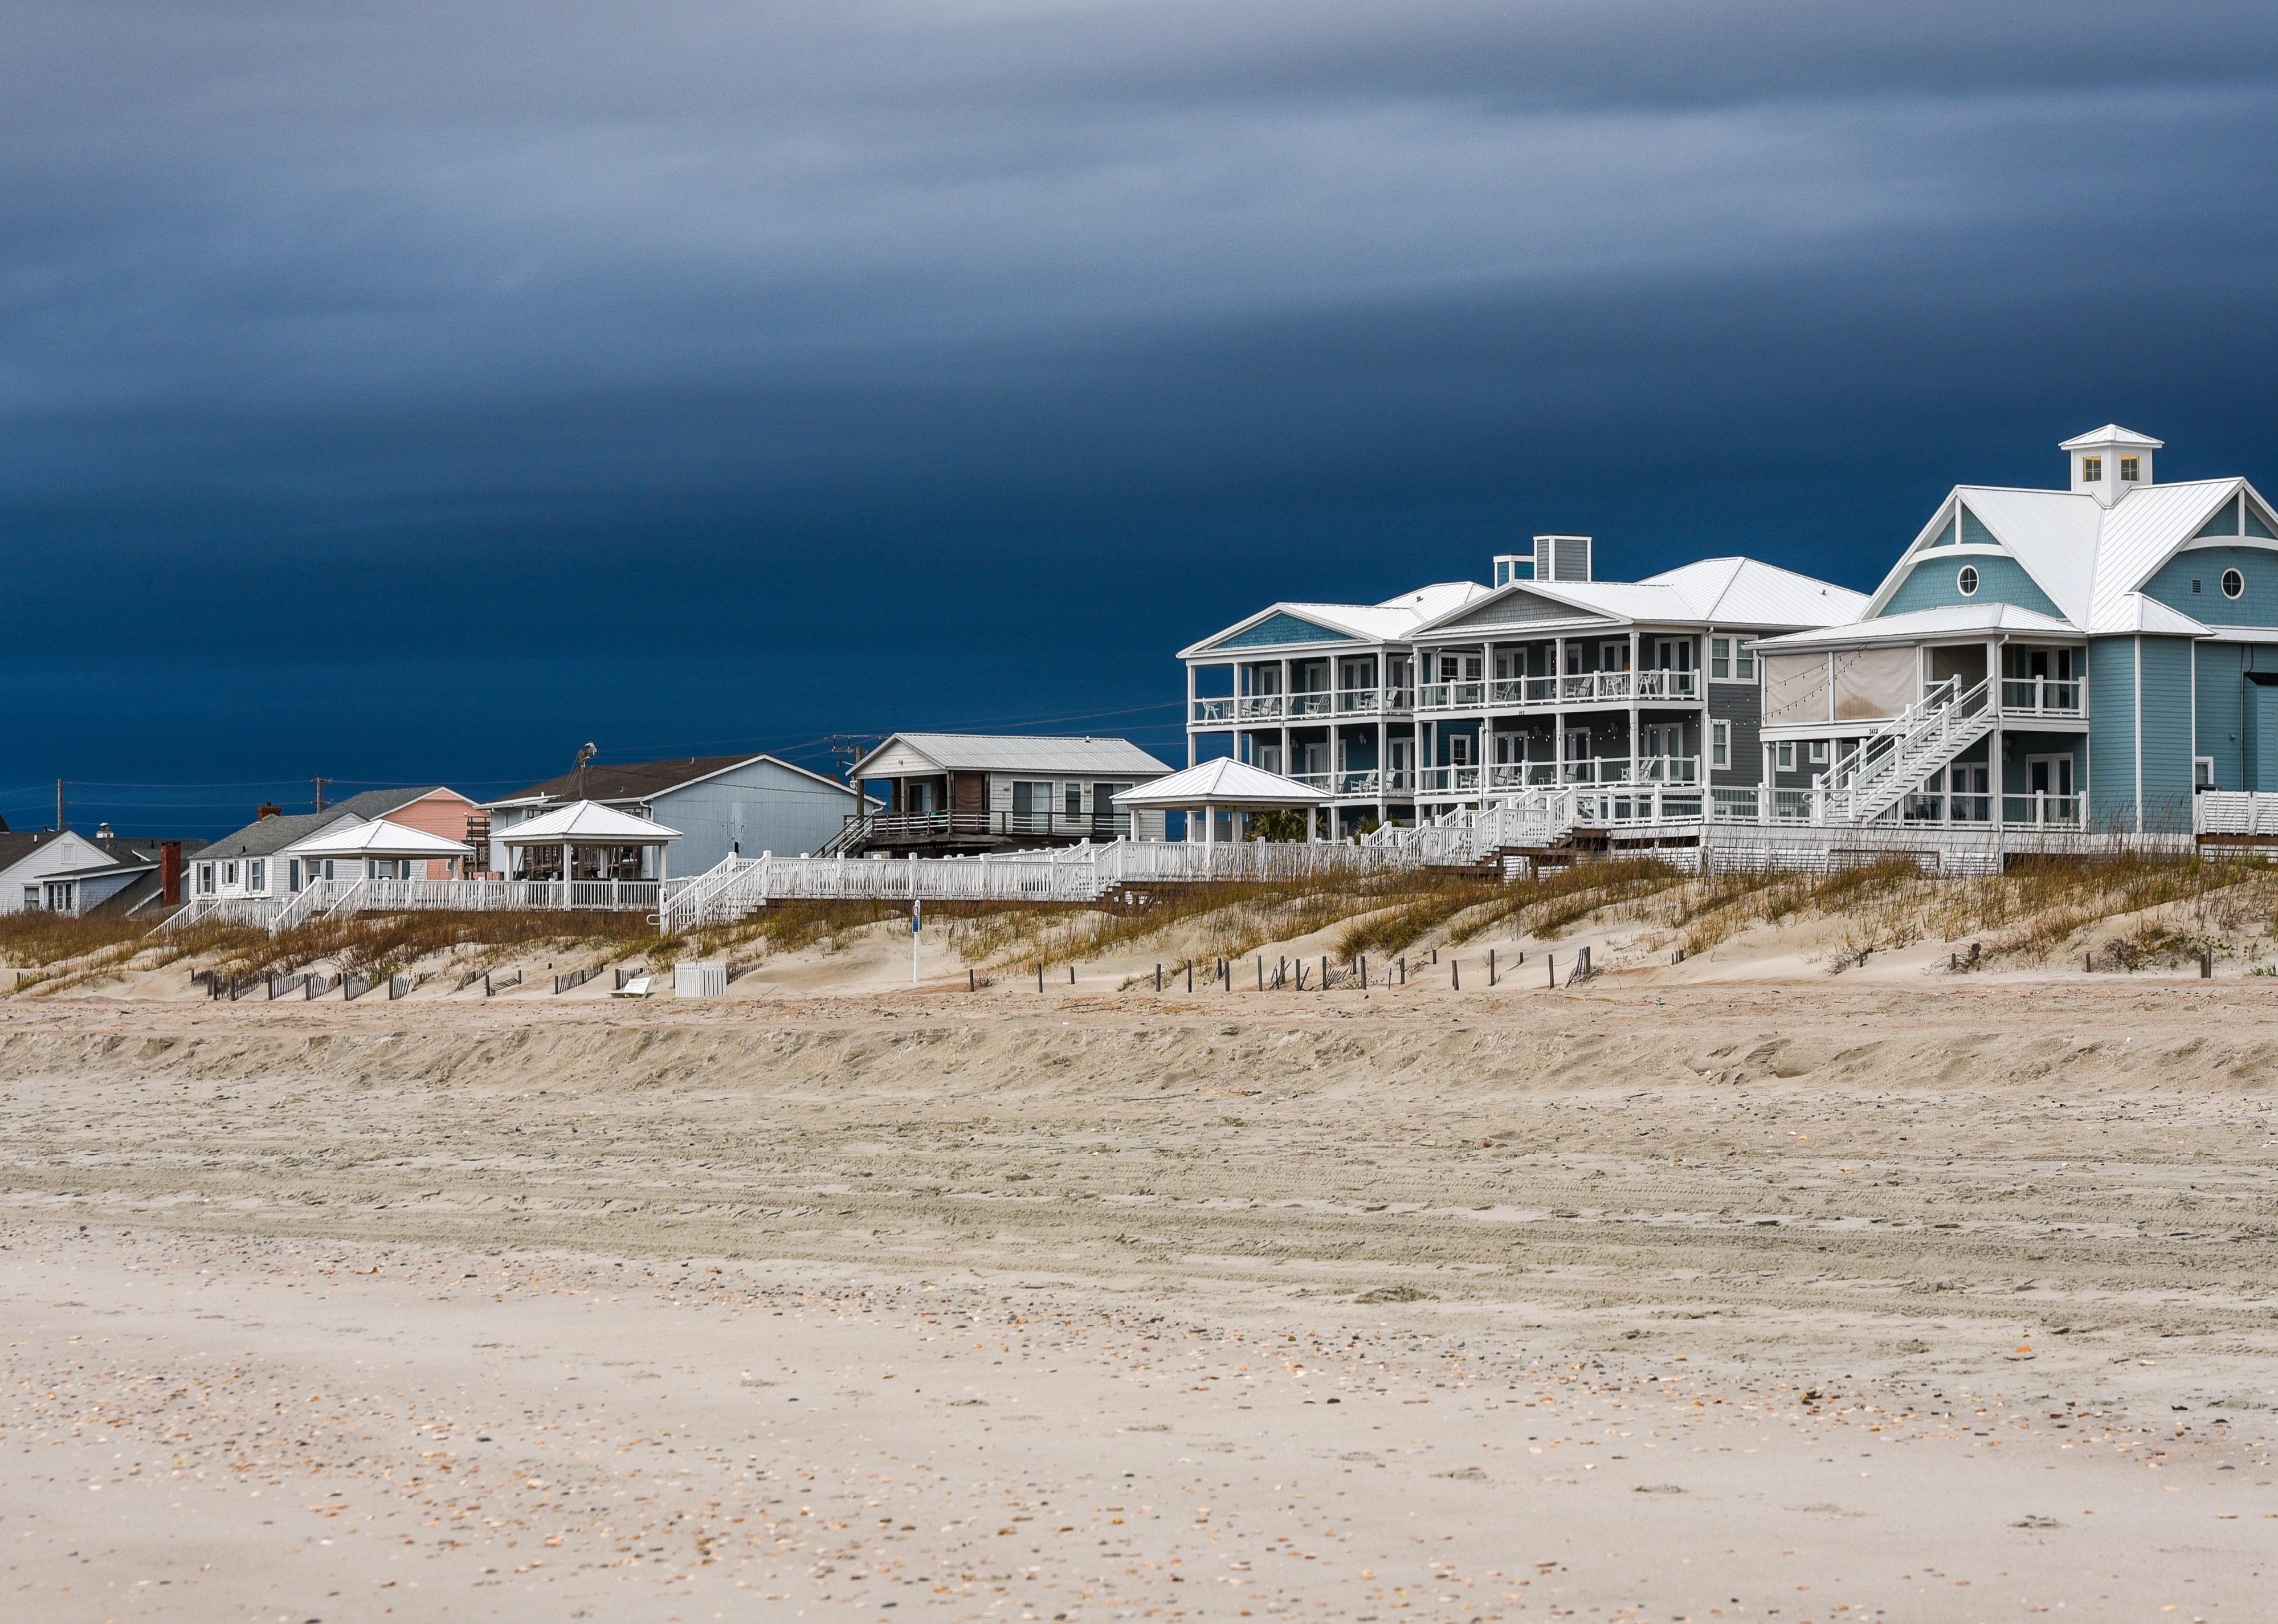 Beach houses on Emerald Isle North Carolina on stormy day.